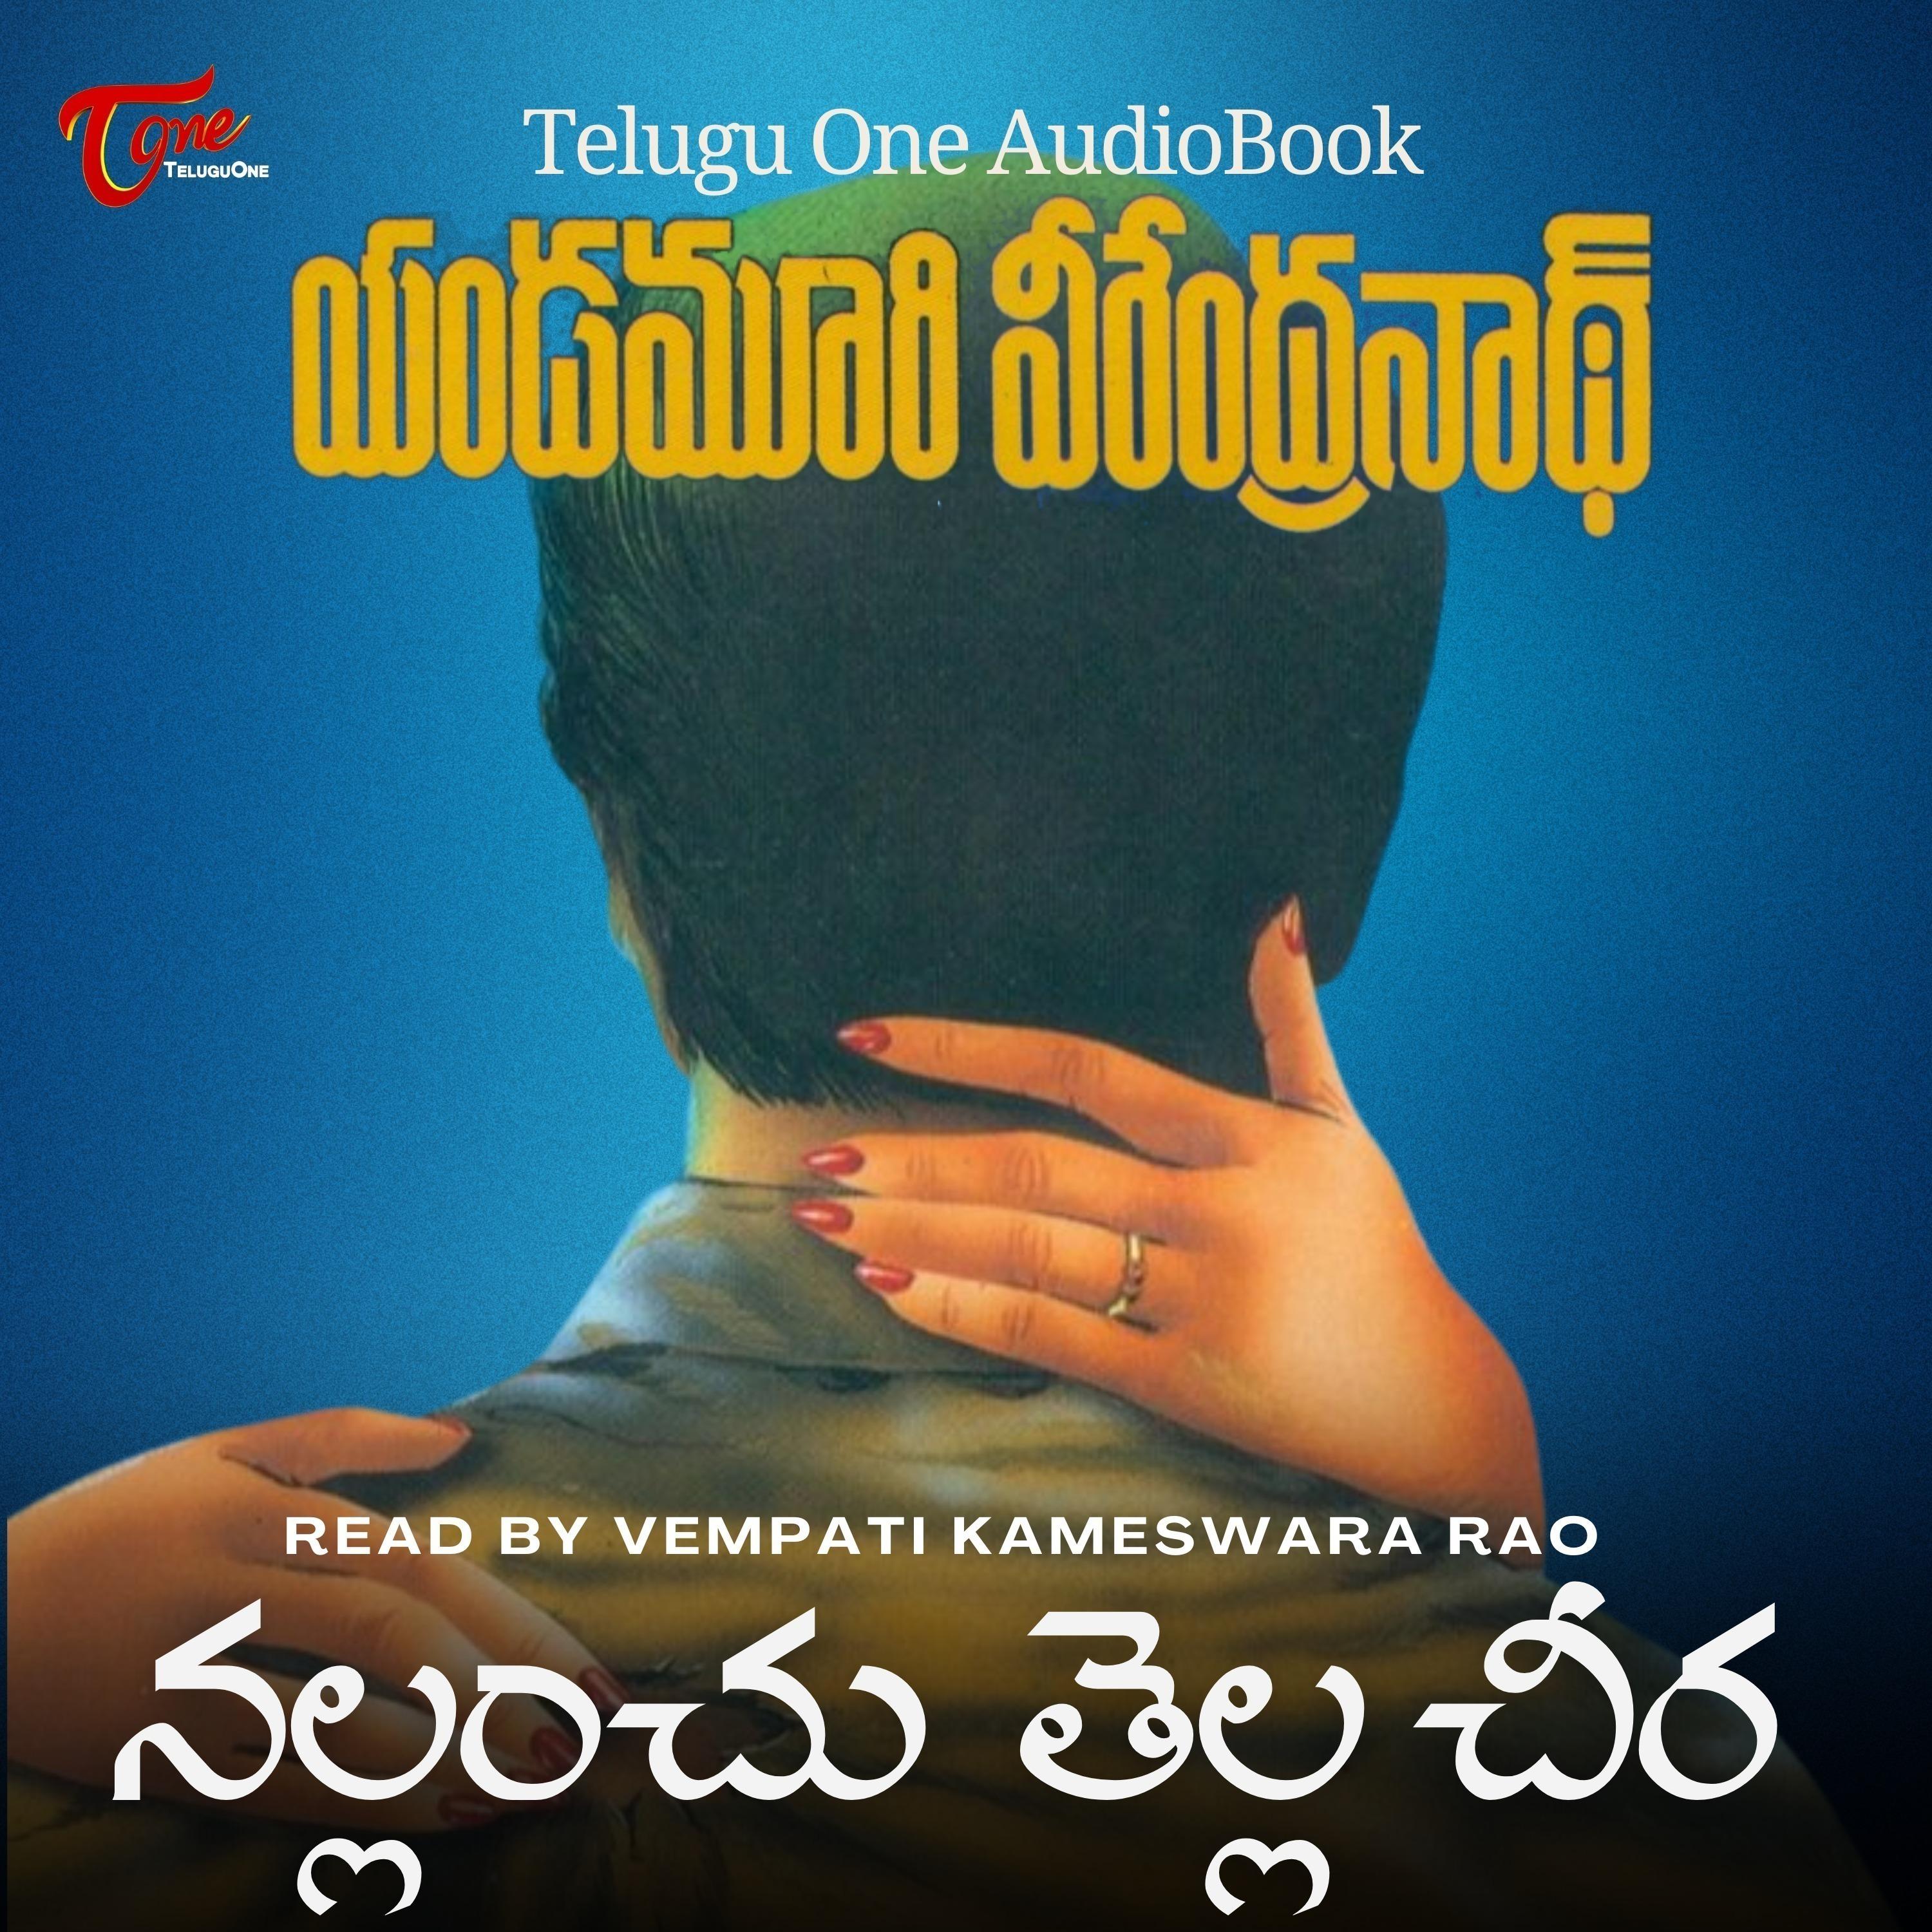 Yandamoori Veerendranath - Nallanchu Tella Cheera (Telugu audio book)